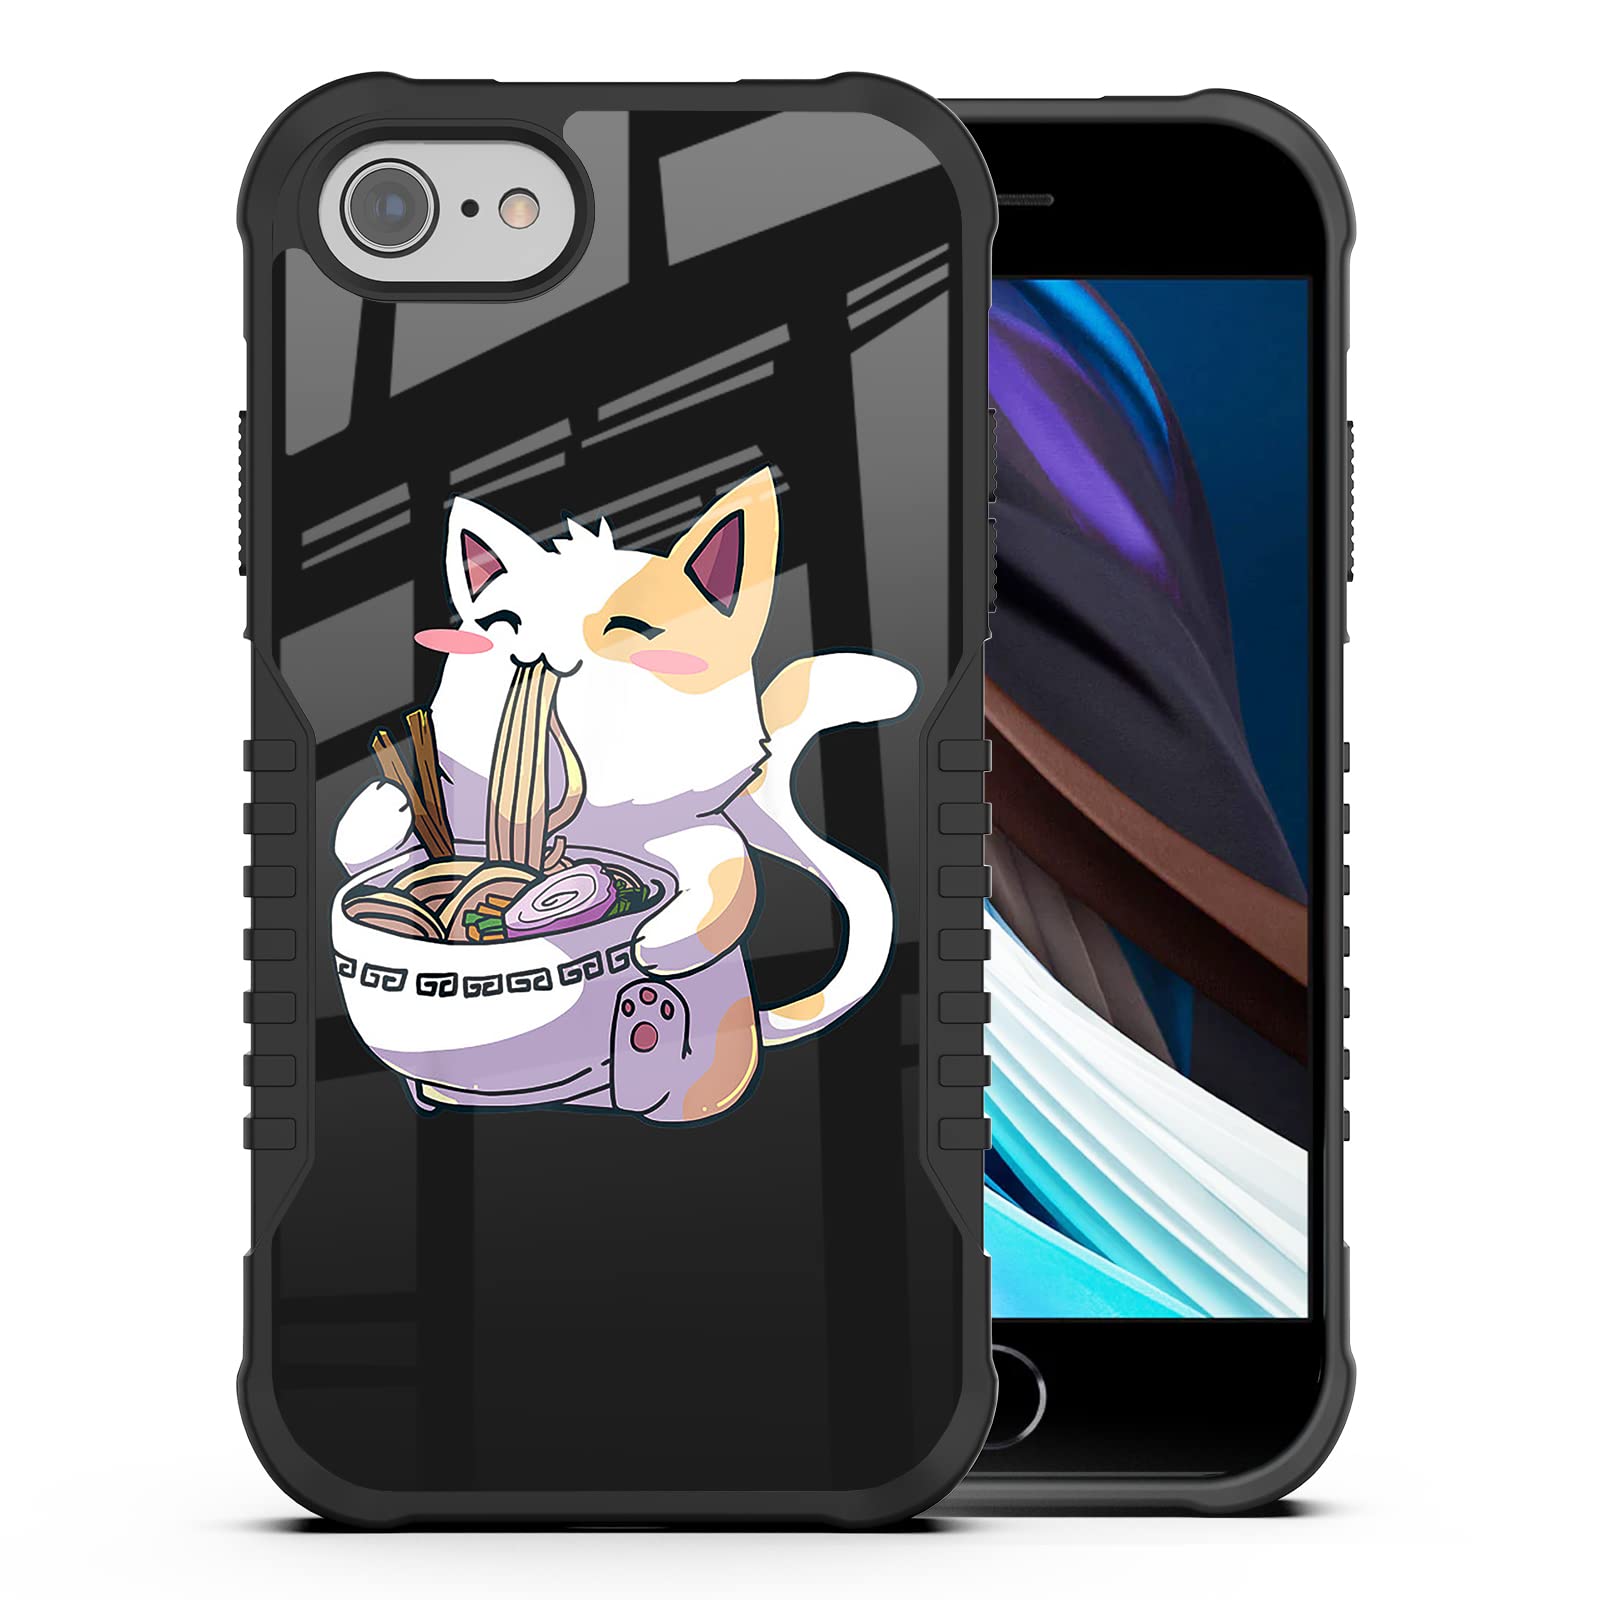 YU GI OH ANIME ART iPhone SE 2020 Case Cover